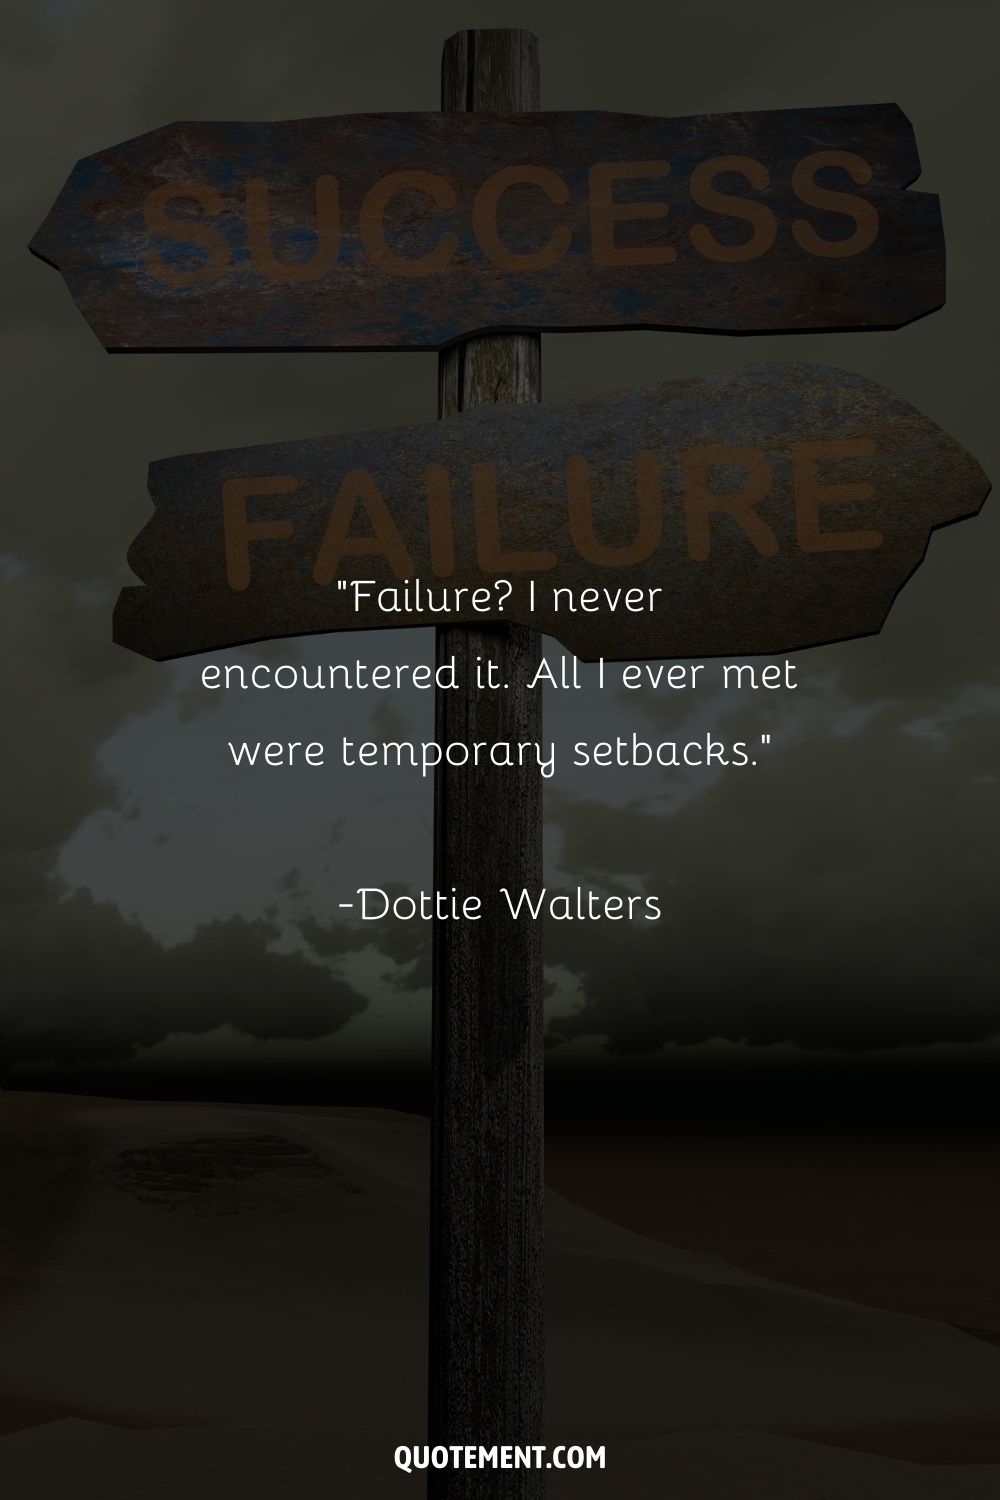 “Failure I never encountered it. All I ever met were temporary setbacks.” ― Dottie Walters